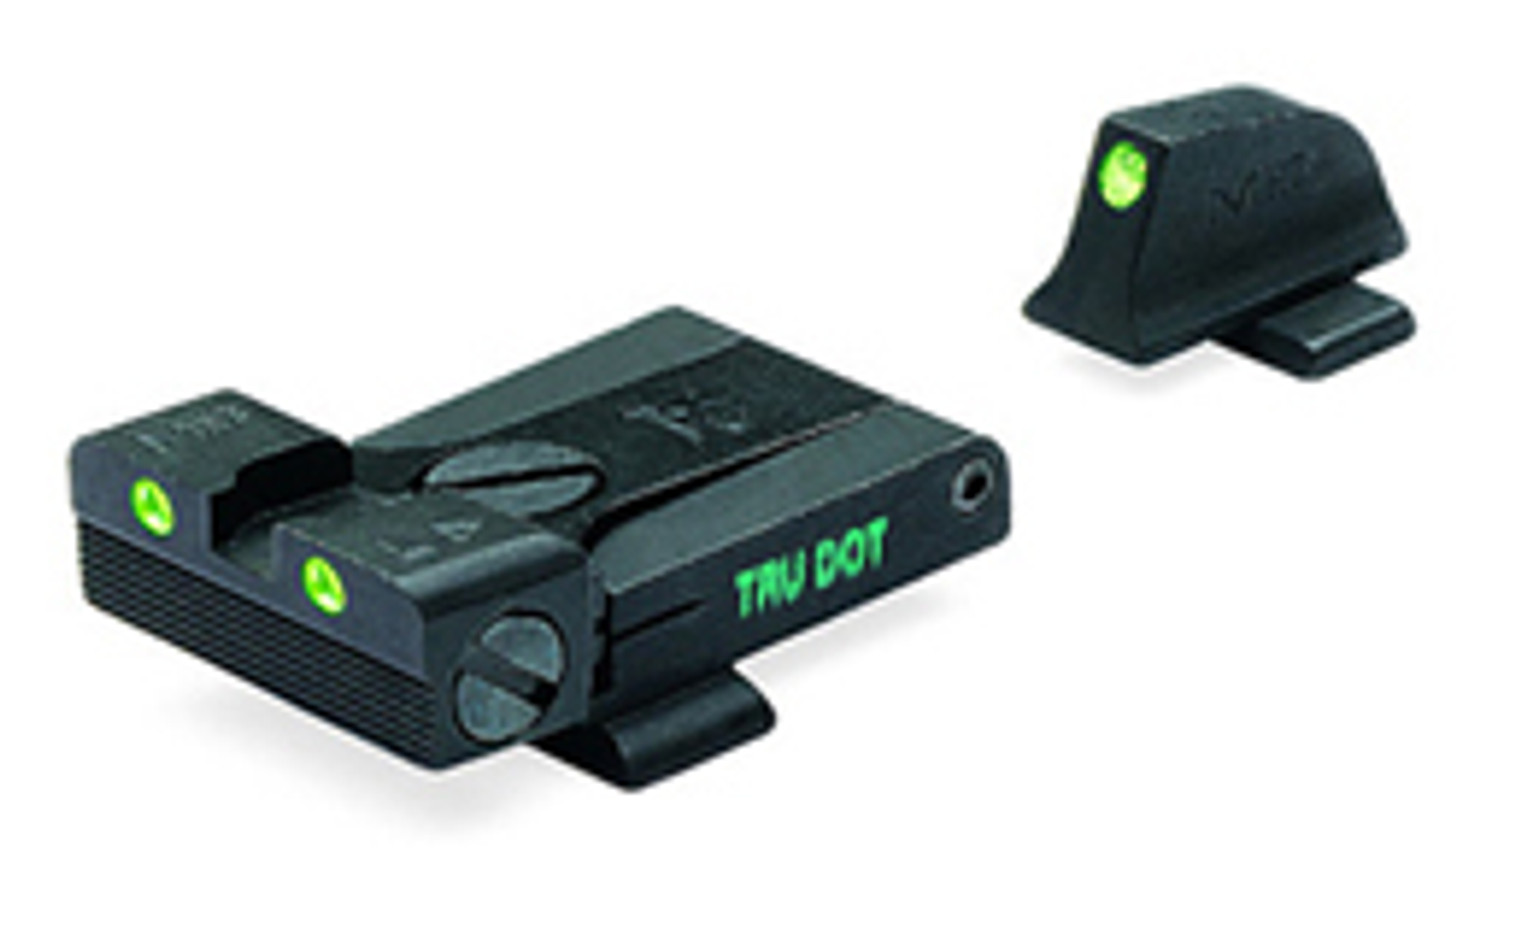 Meprolight Sig Sauer Tru-Dot Night Sight TD Adjustable Set For Pistols w/#8 front & Rear Sights